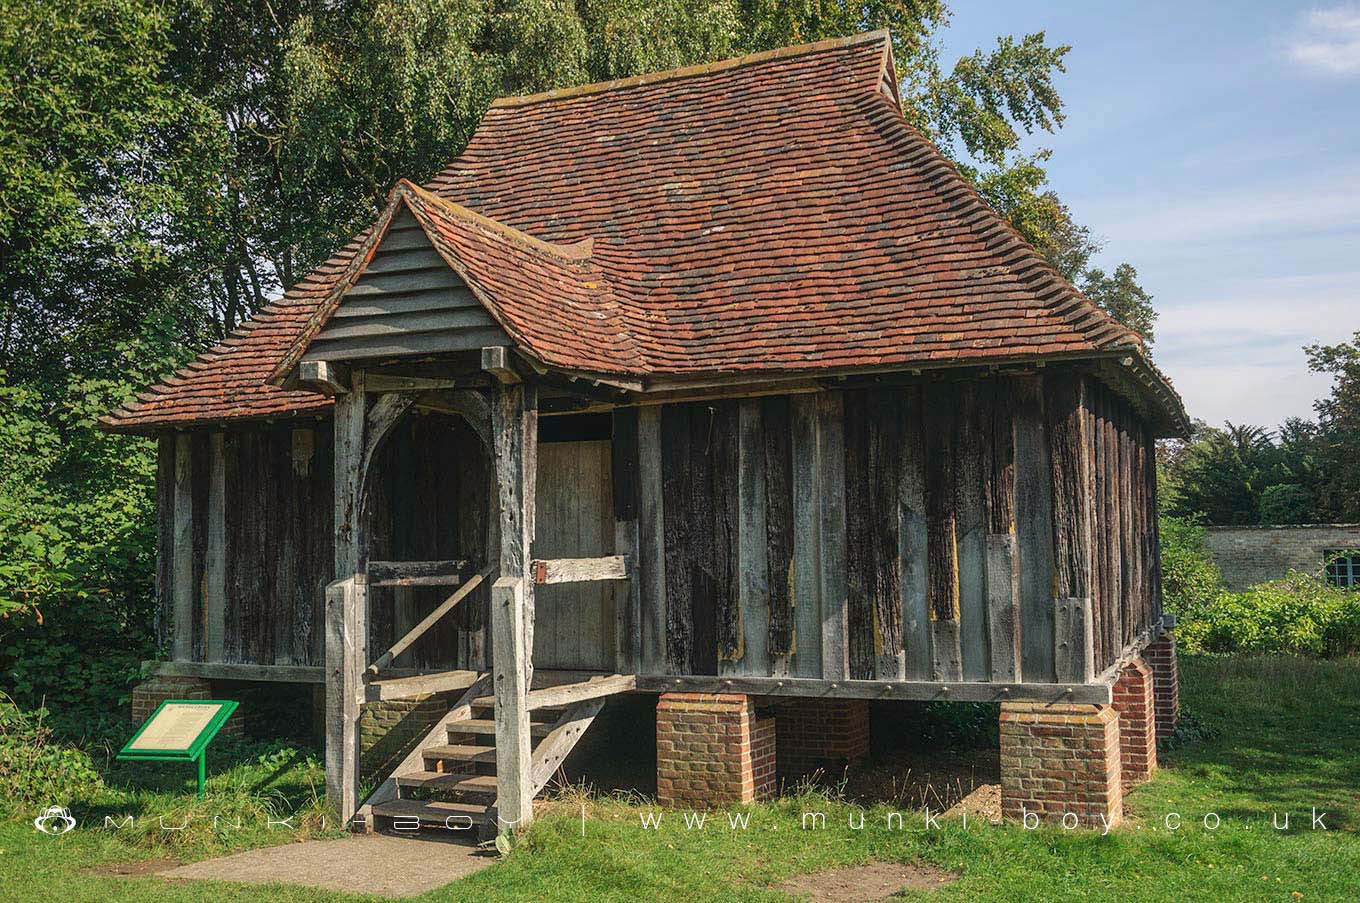 Historic Buildings in Cambridgeshire